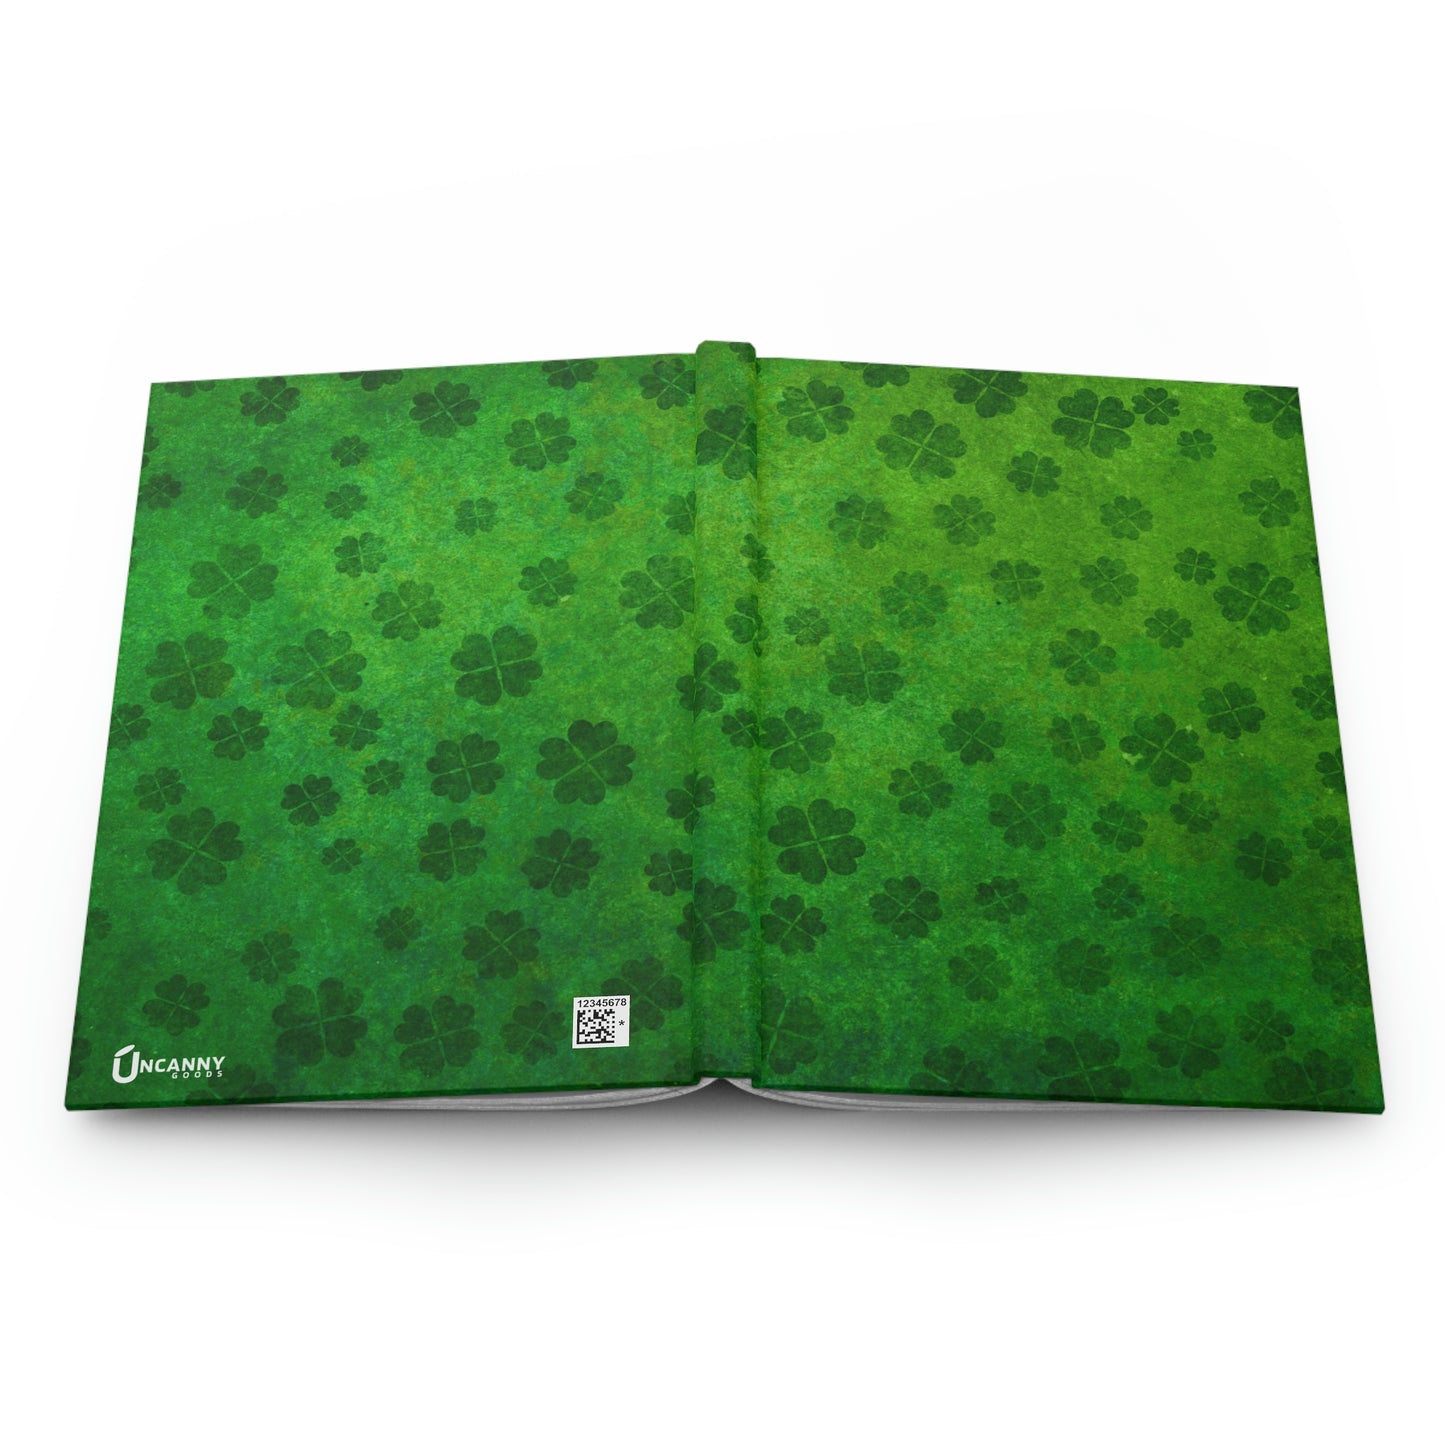 Green-Out Notebook Book Hardcover Journal Matte